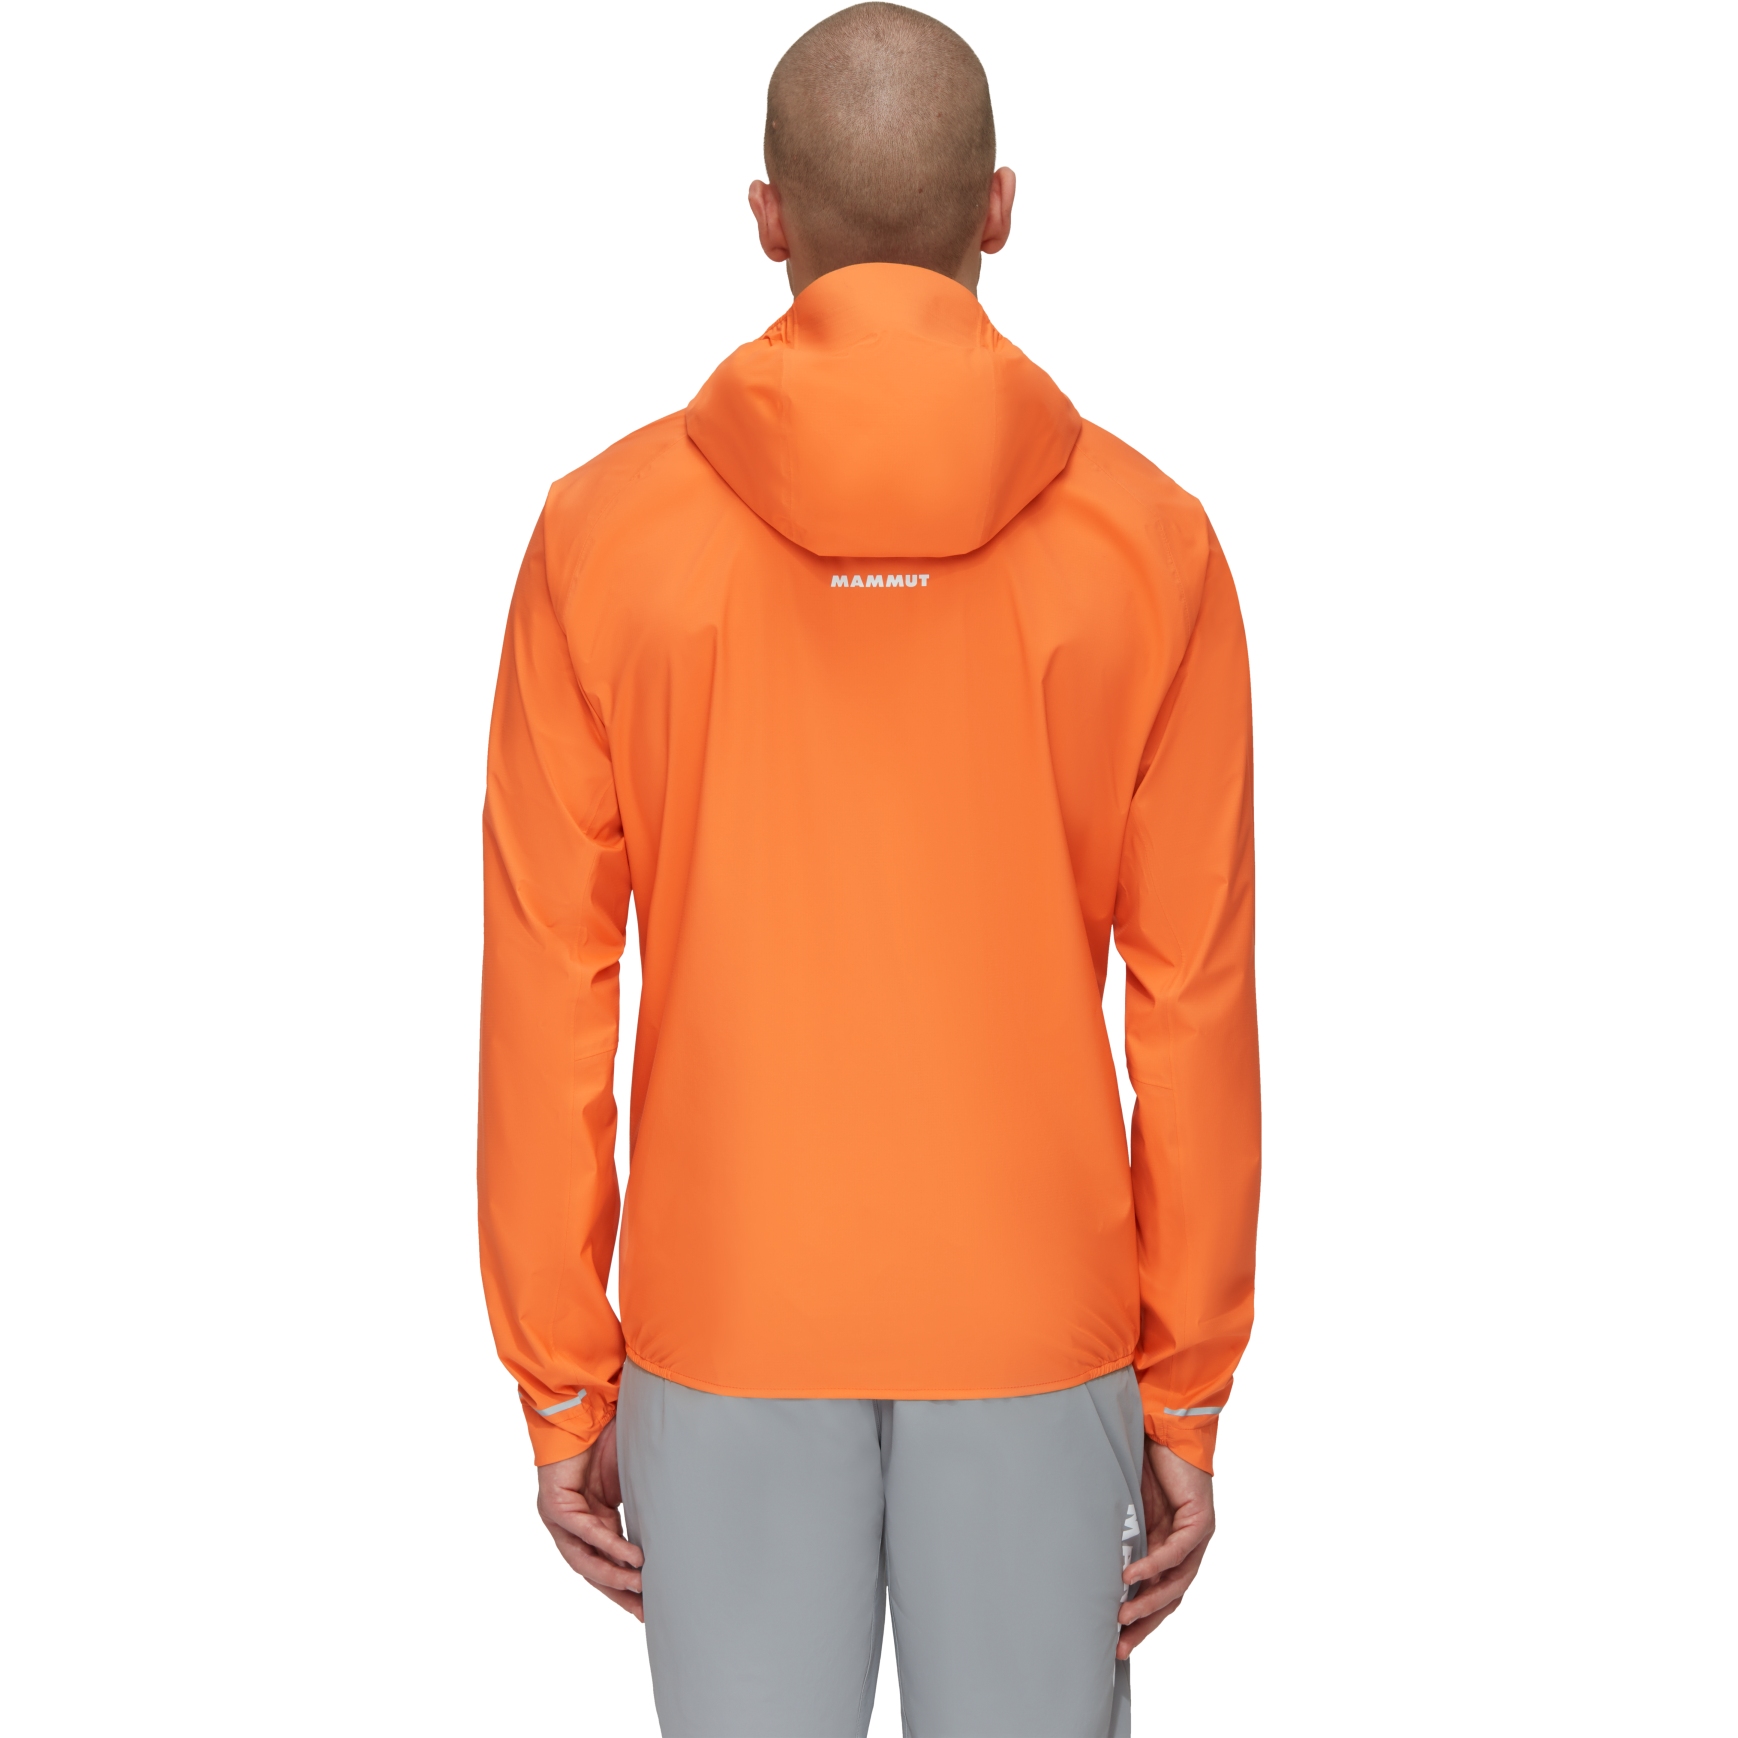 Mammut ULTIMATE - Soft shell jacket - dark tangerine/orange